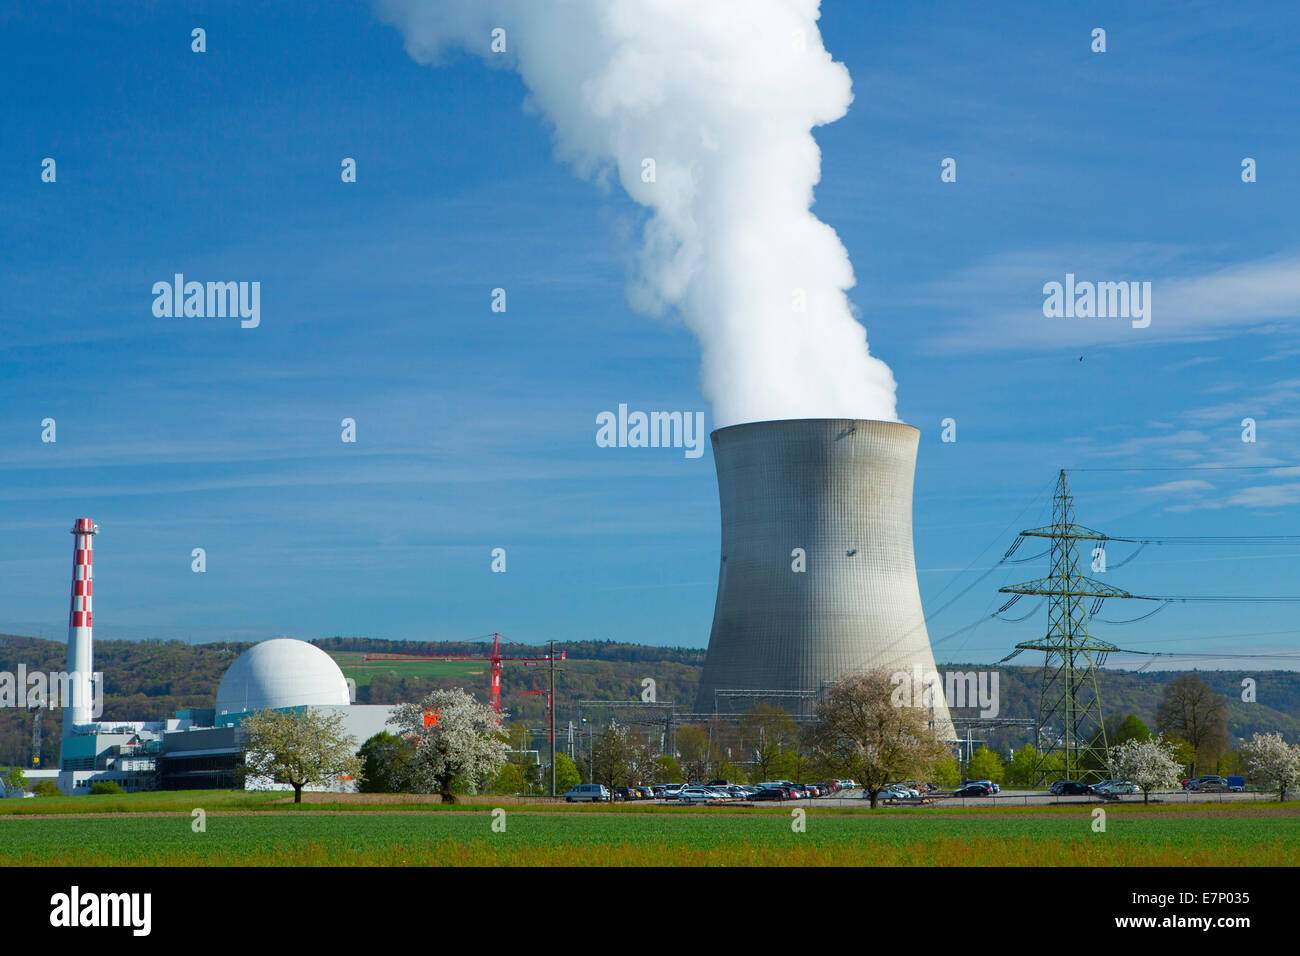 Atomkraftwerk Banque d'image et photos - Alamy